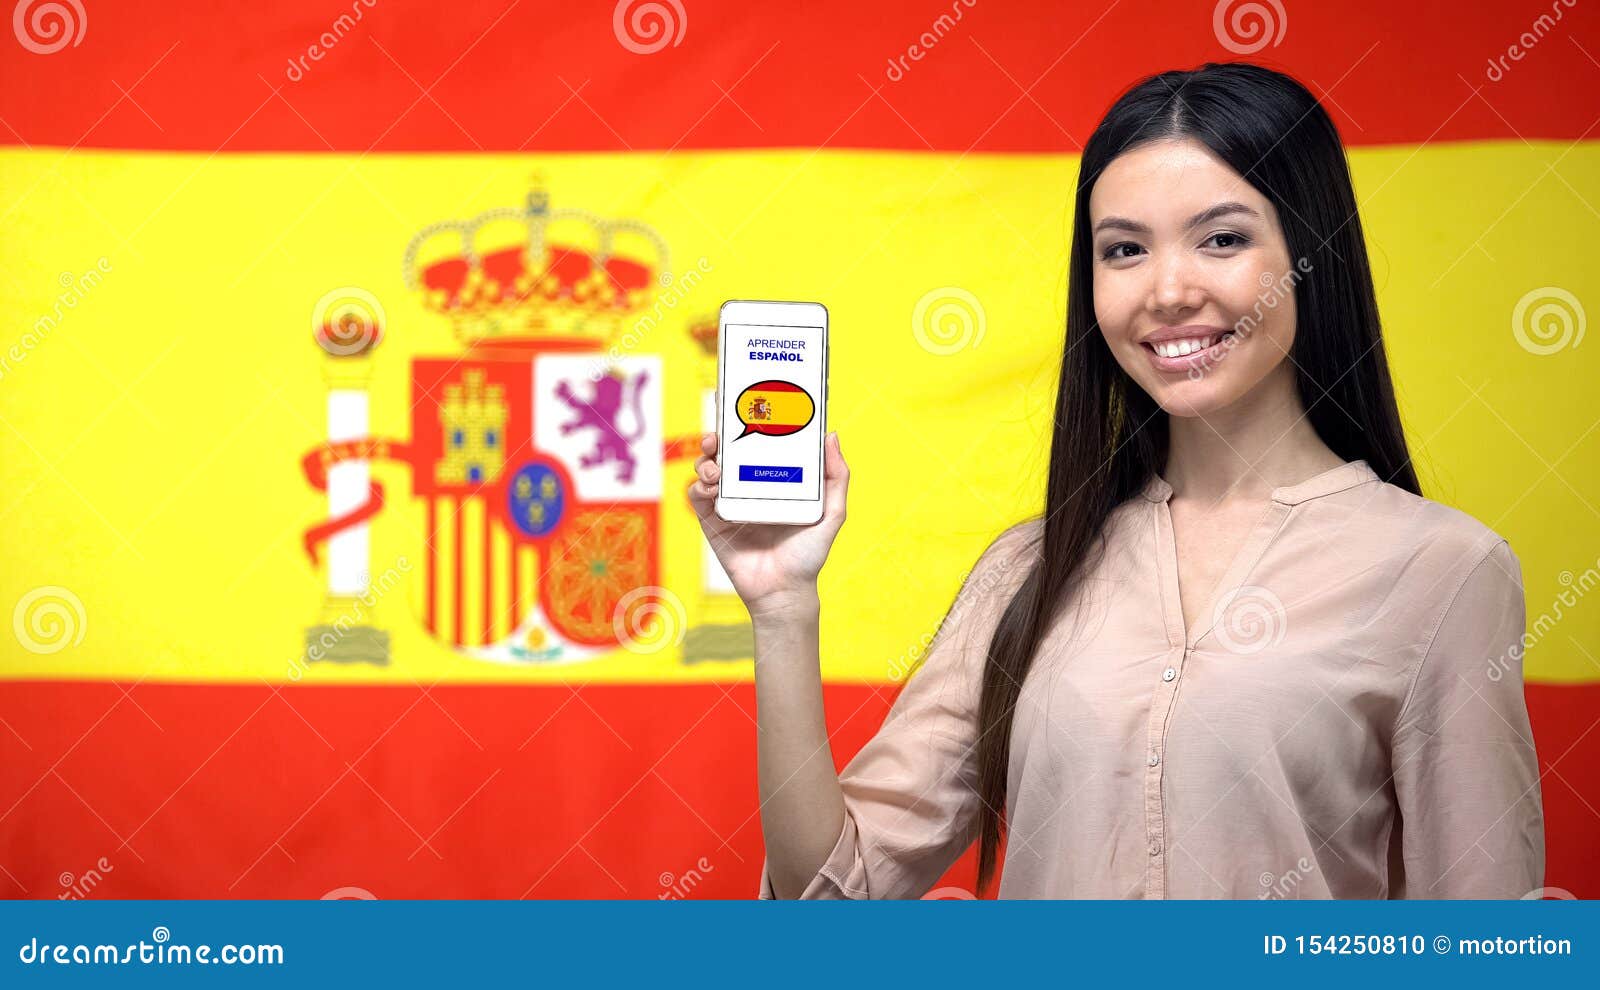 girl holding smartphone with language study app, spanish flag on background